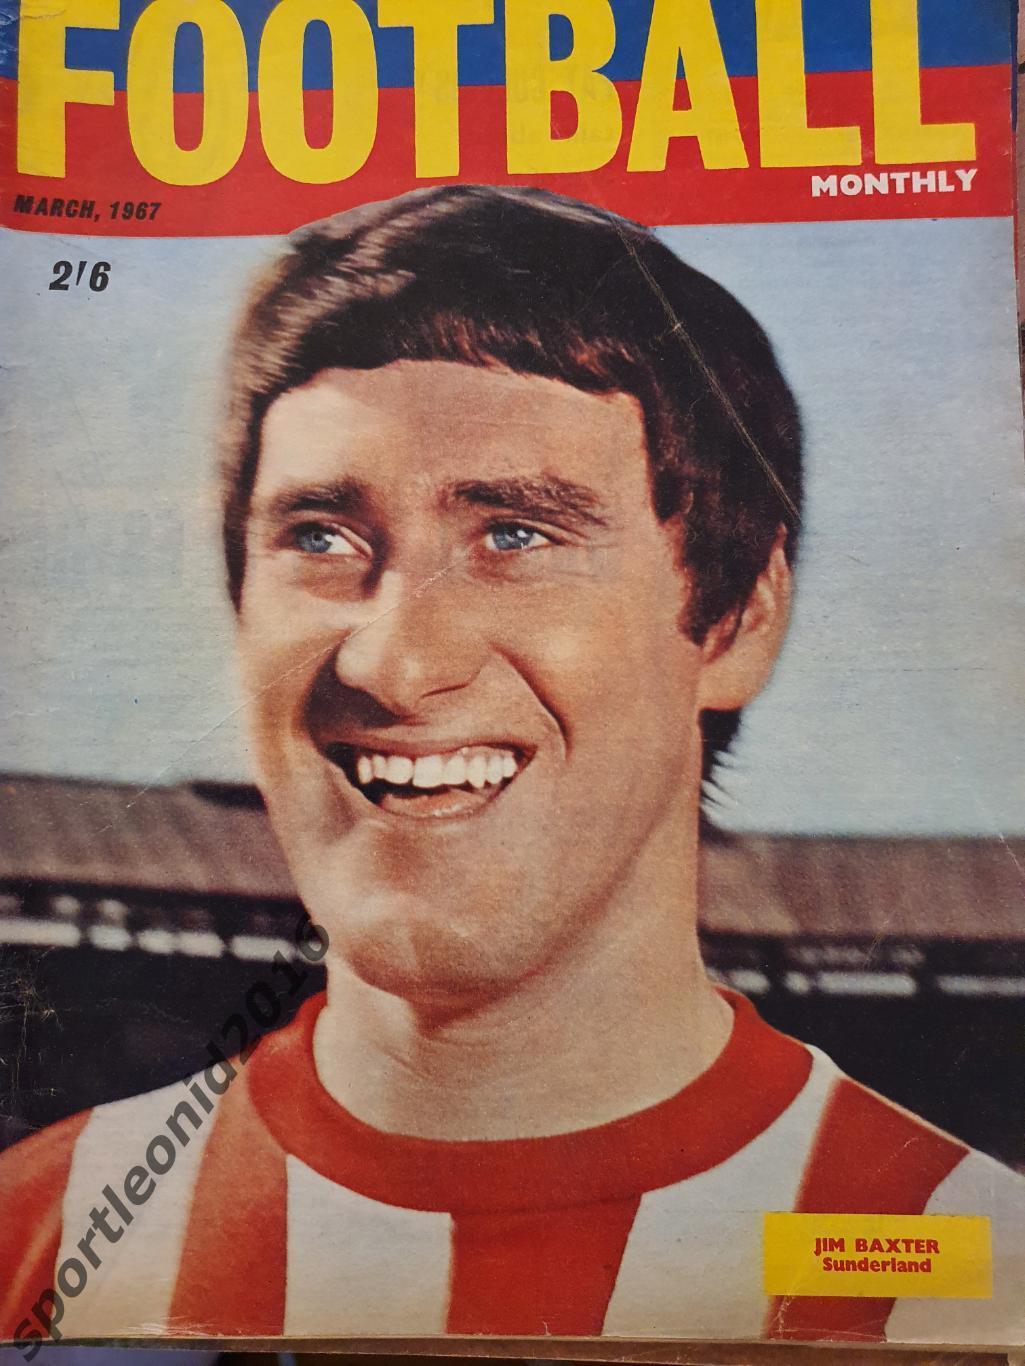 Football Monthly Charles Buchans's 1967 8 выпусков.2 4